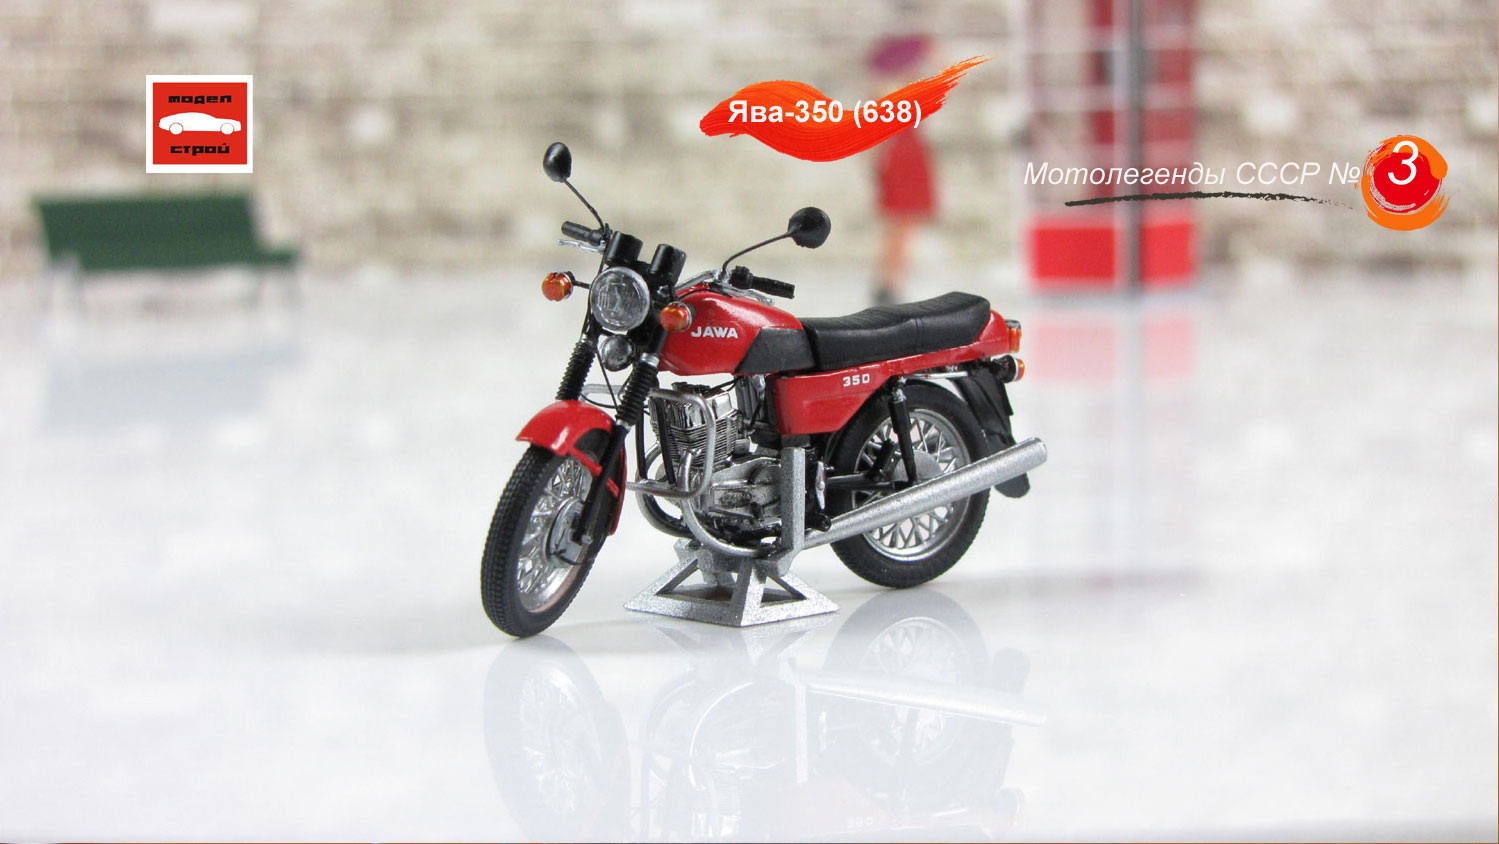 Ява-350-638, мотоцикл модель в масштабе 1:43 фото 1